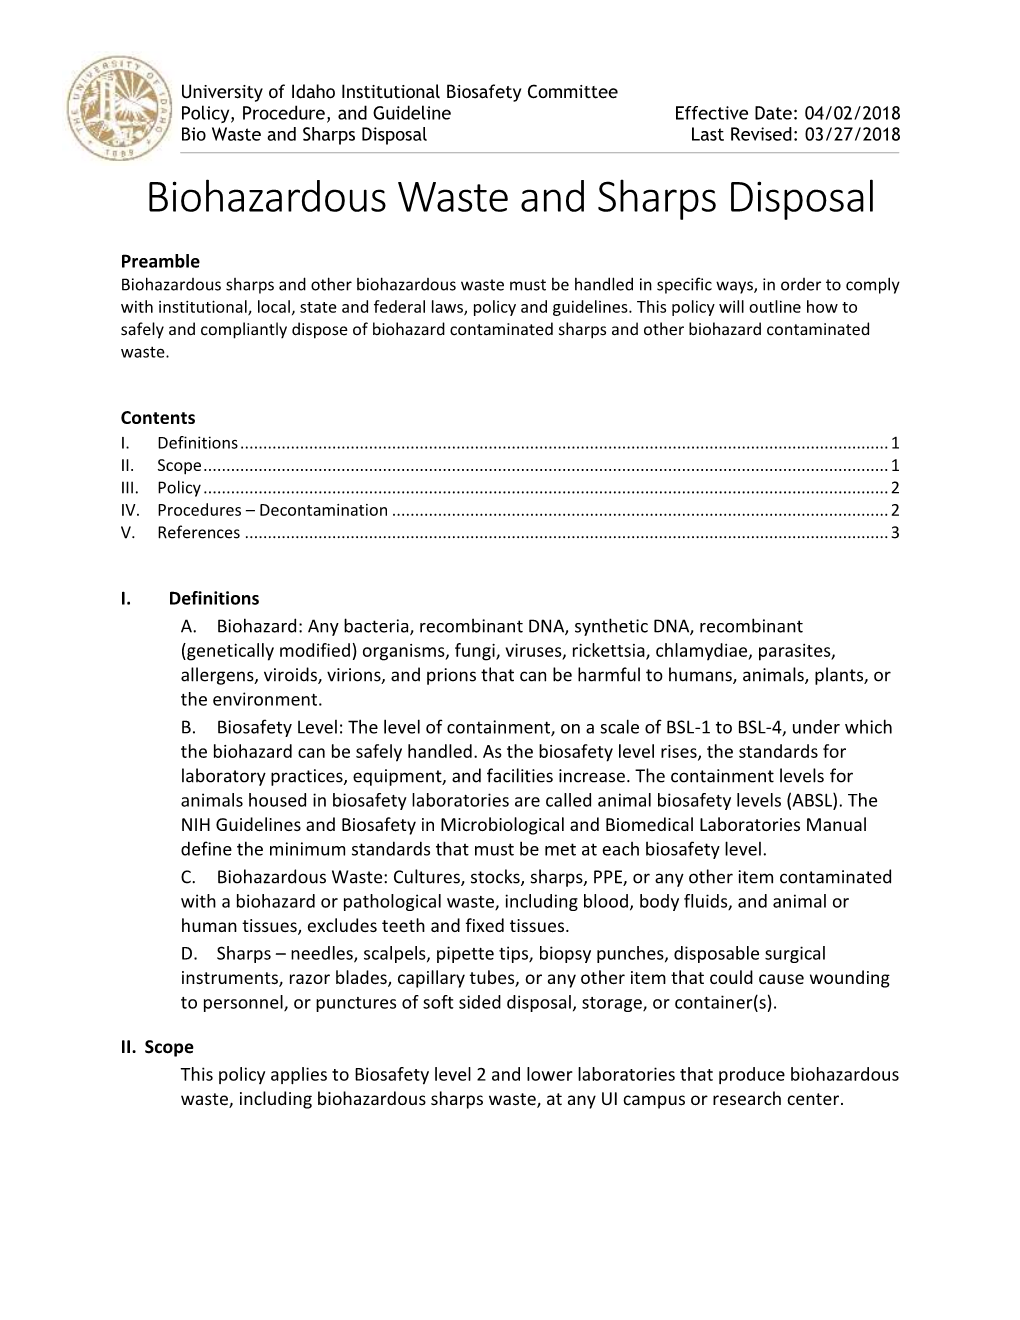 Biohazardous Waste and Sharps Disposal